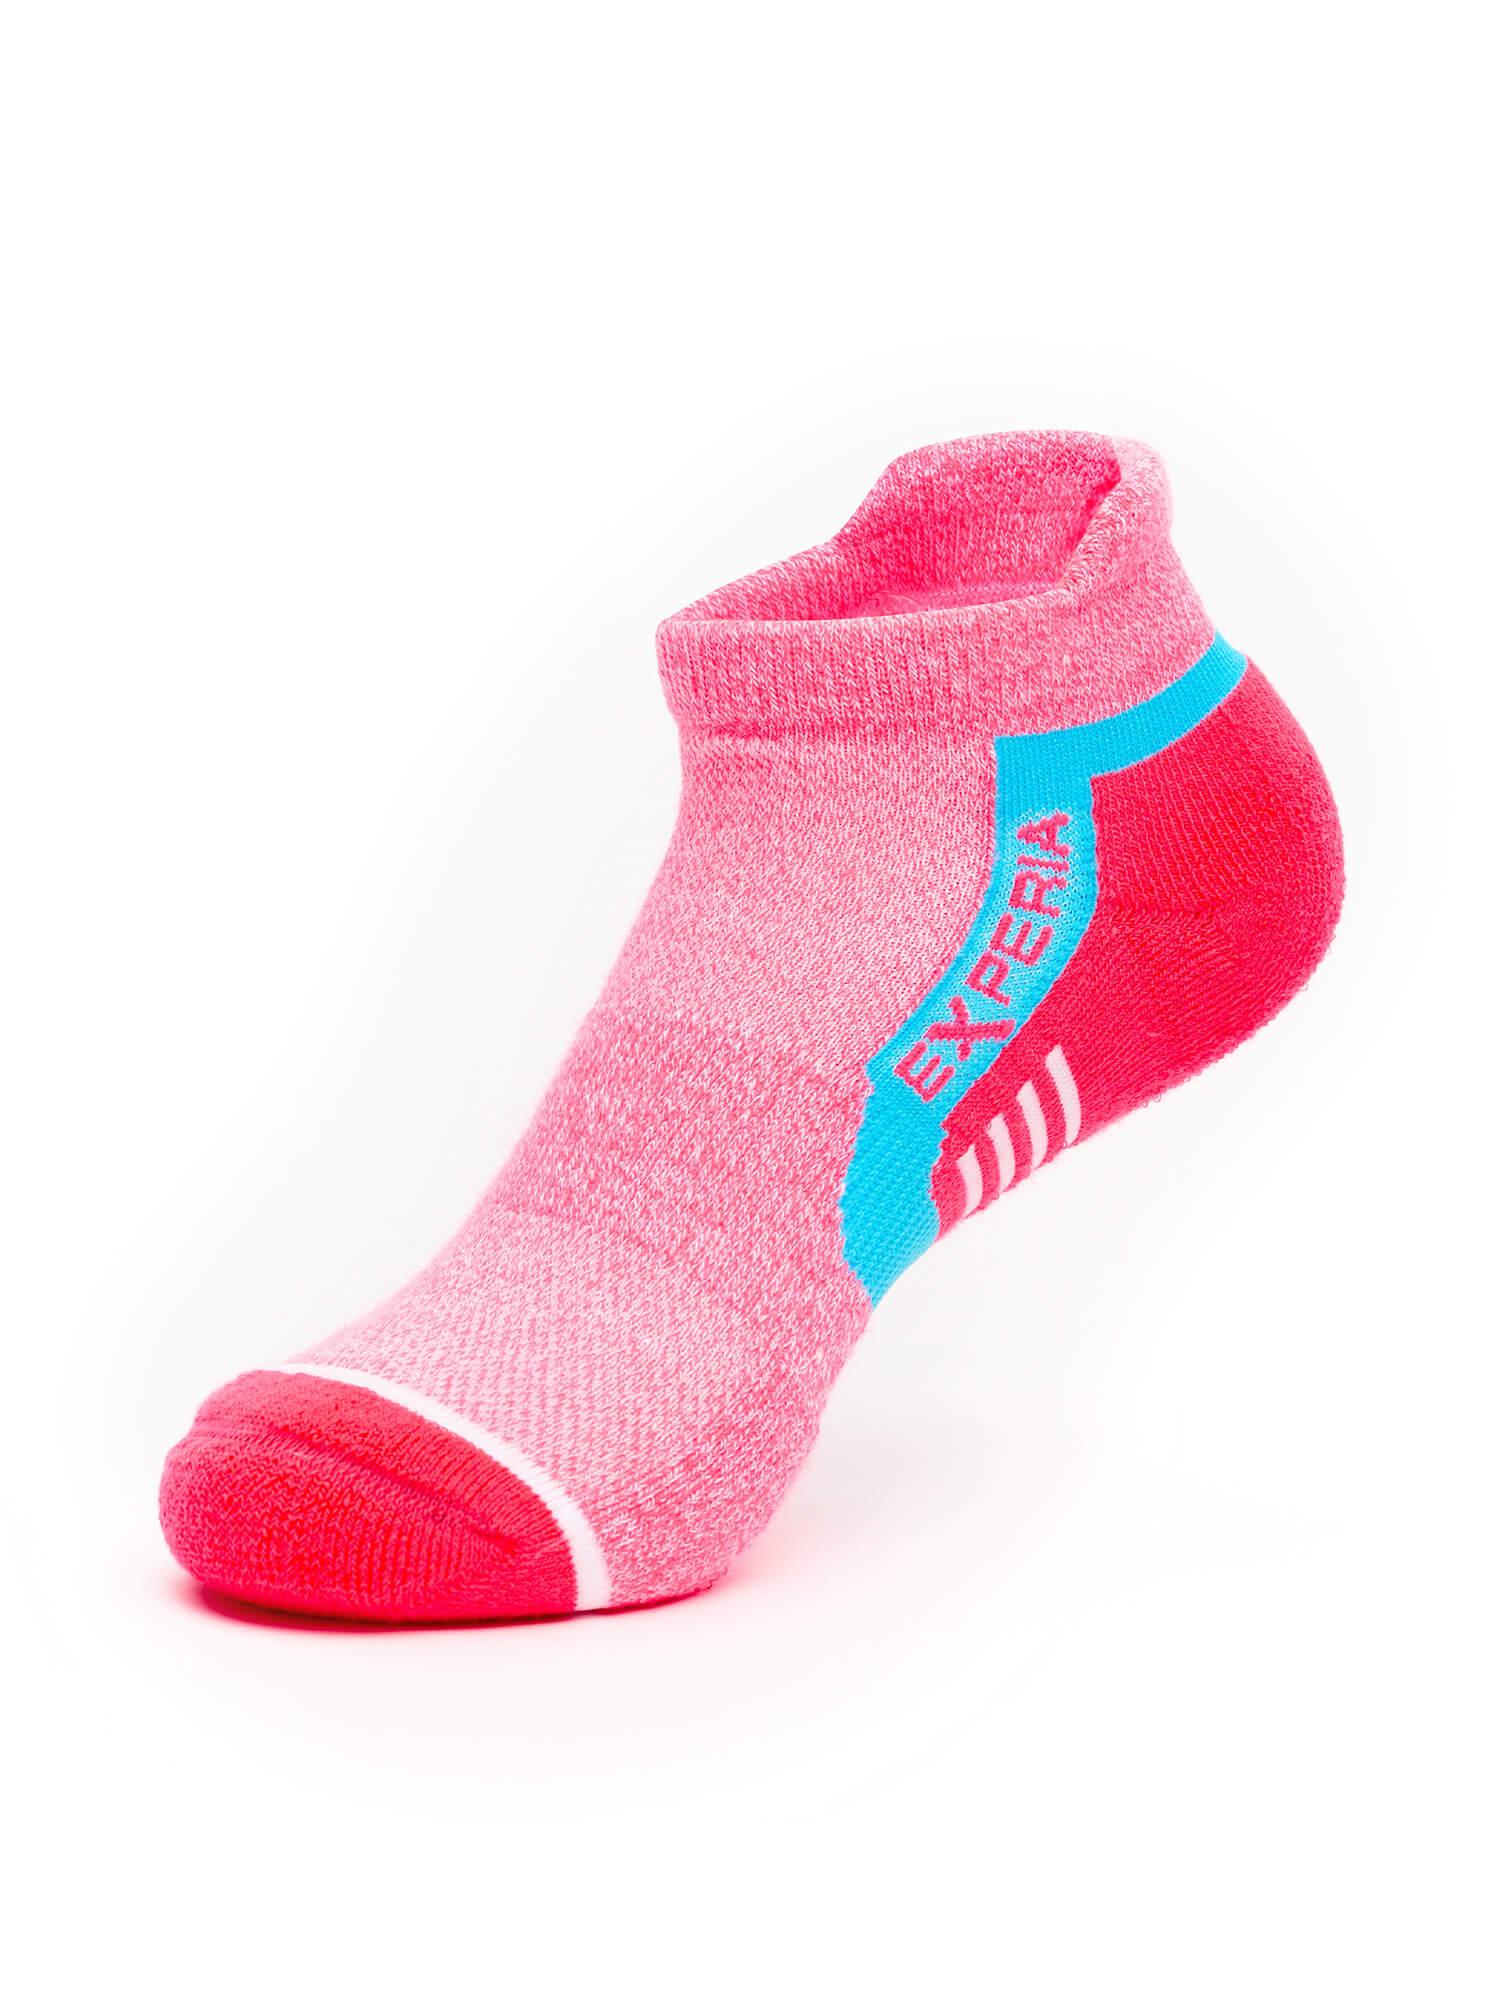 Side of Thorlos Experia Repreve Low Cut Socks in Pink